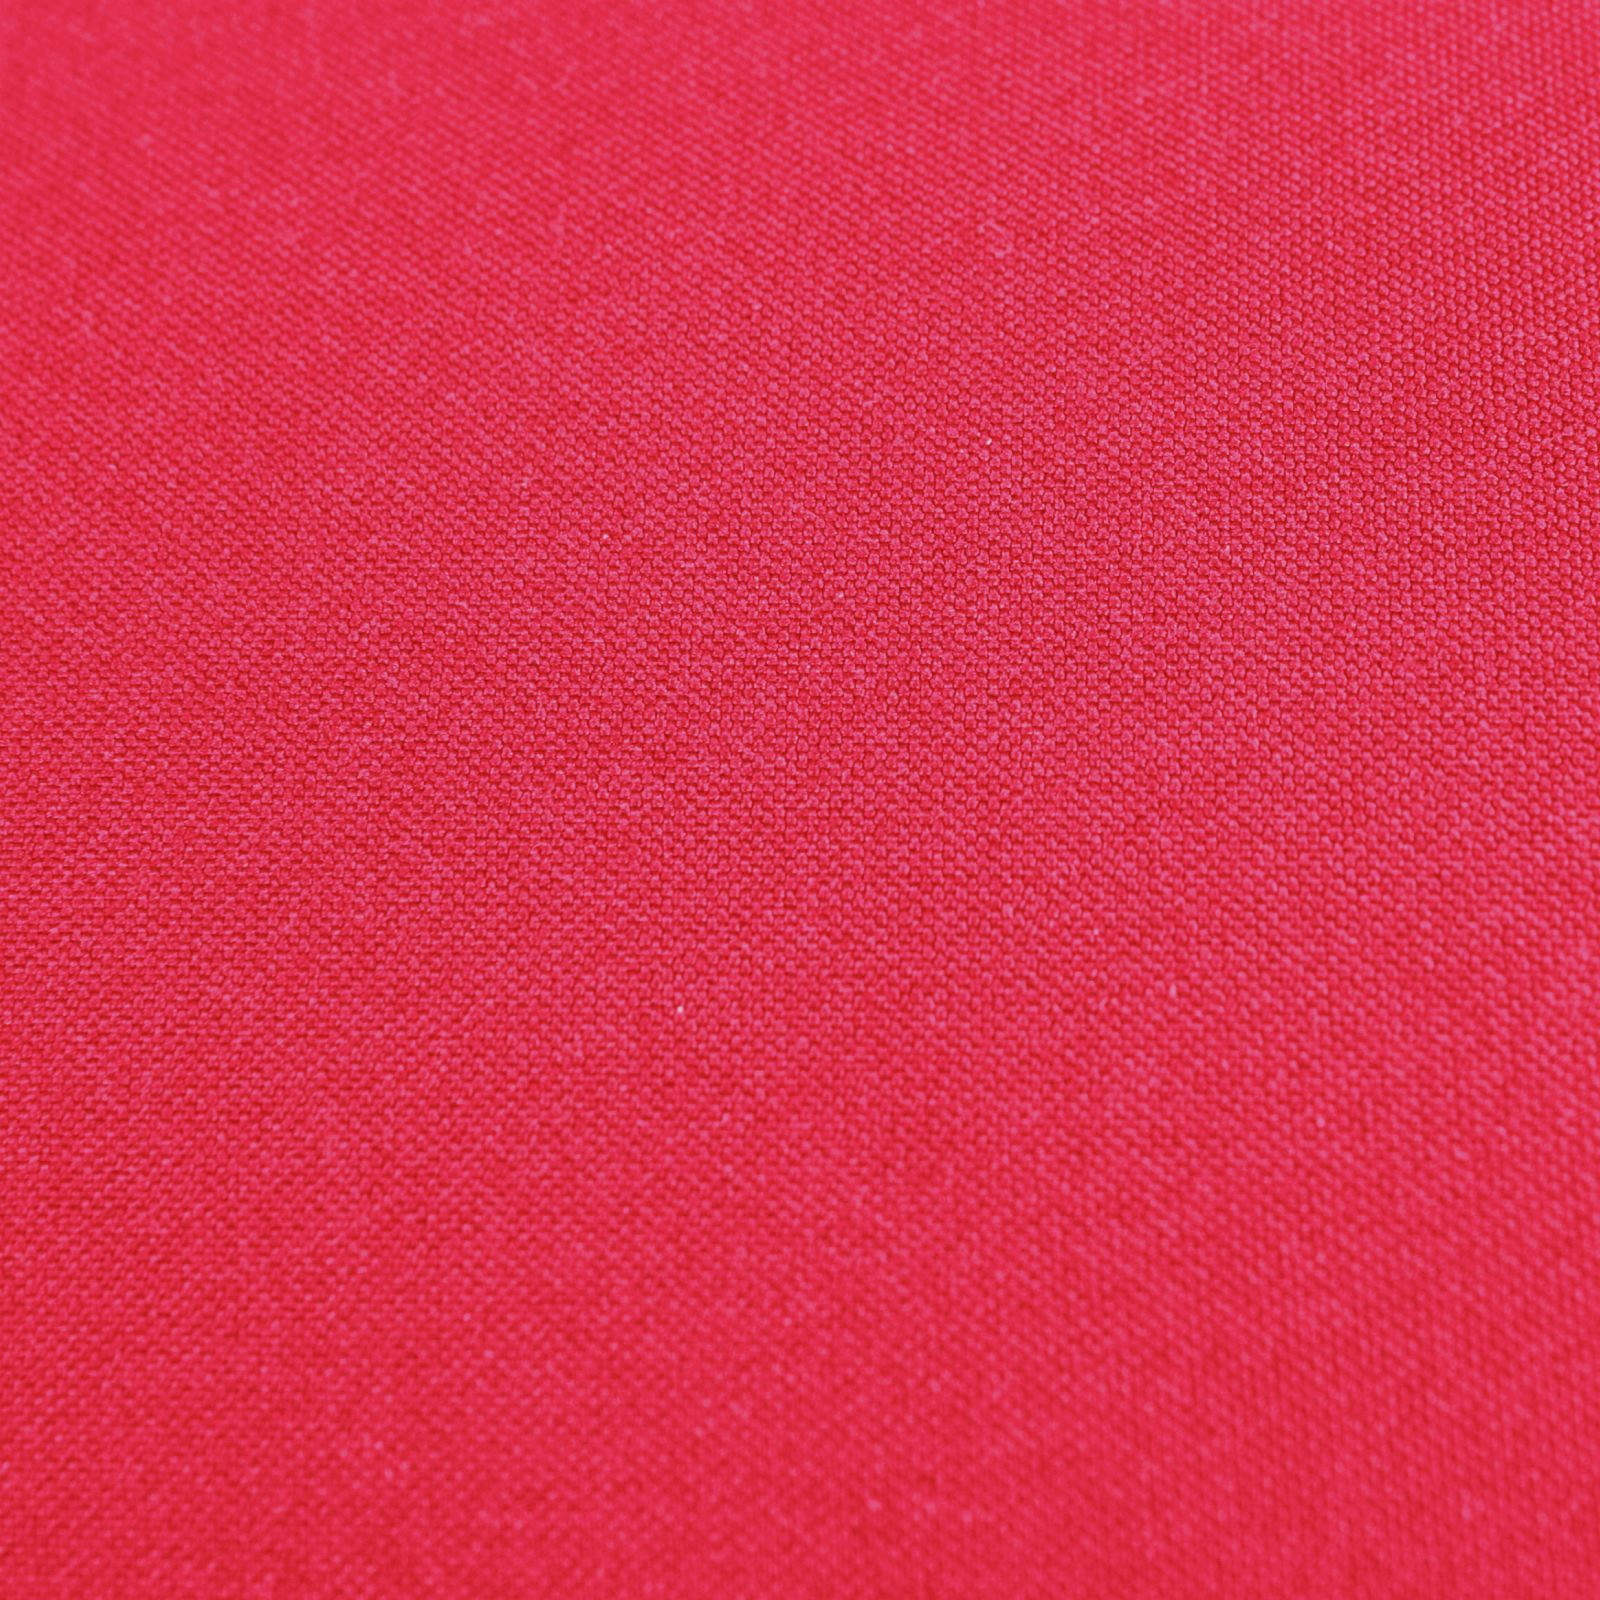 Komplettkissen Polyester-Pink / 40x40 cm